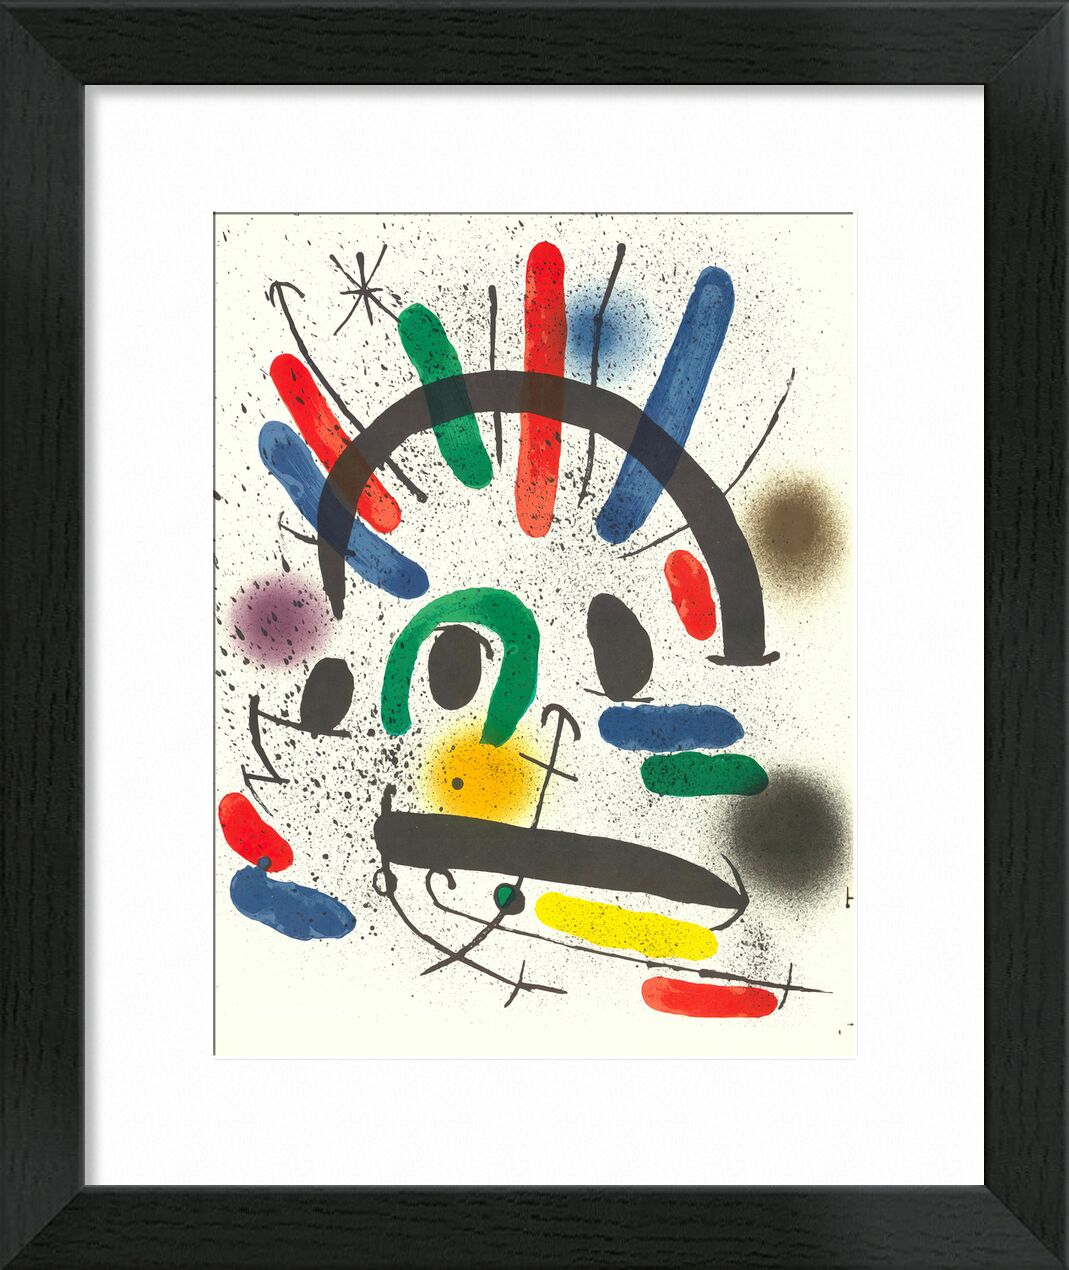 Litografia original II - Joan Miró desde Bellas artes, Prodi Art, Joan Miró, pintura, abstracto, litografía